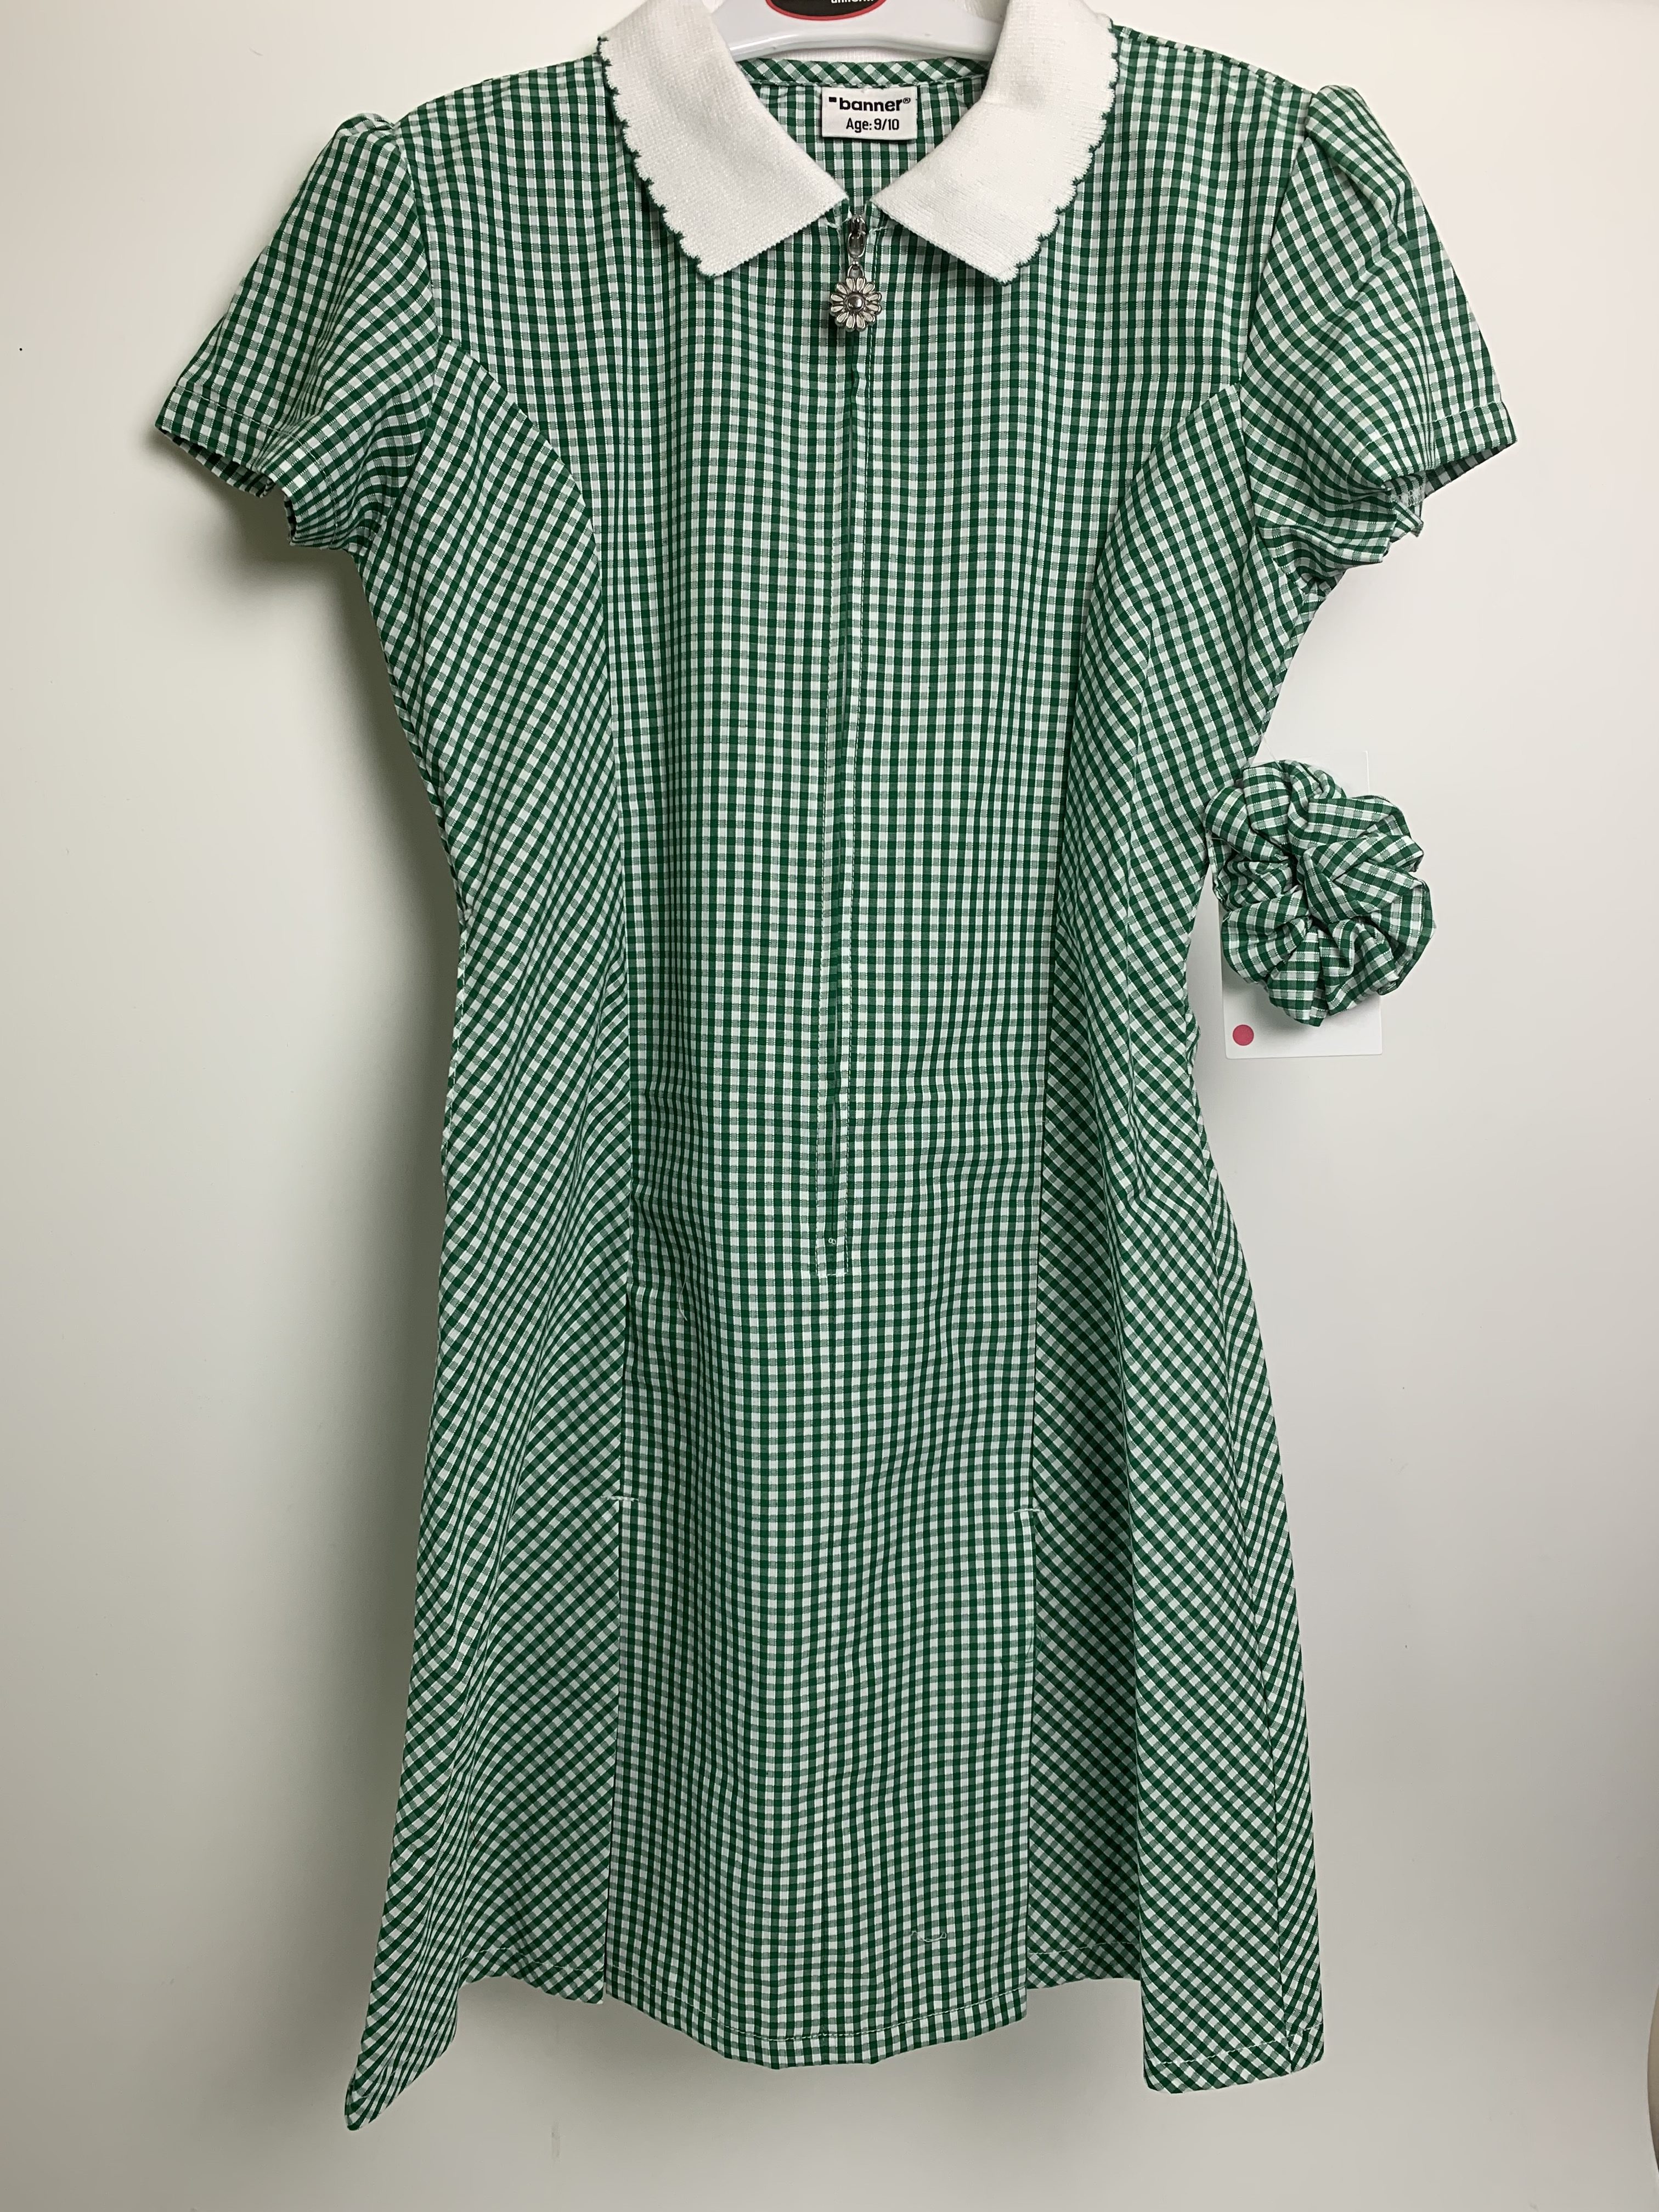 Green Gingham Dress - Age 10/11